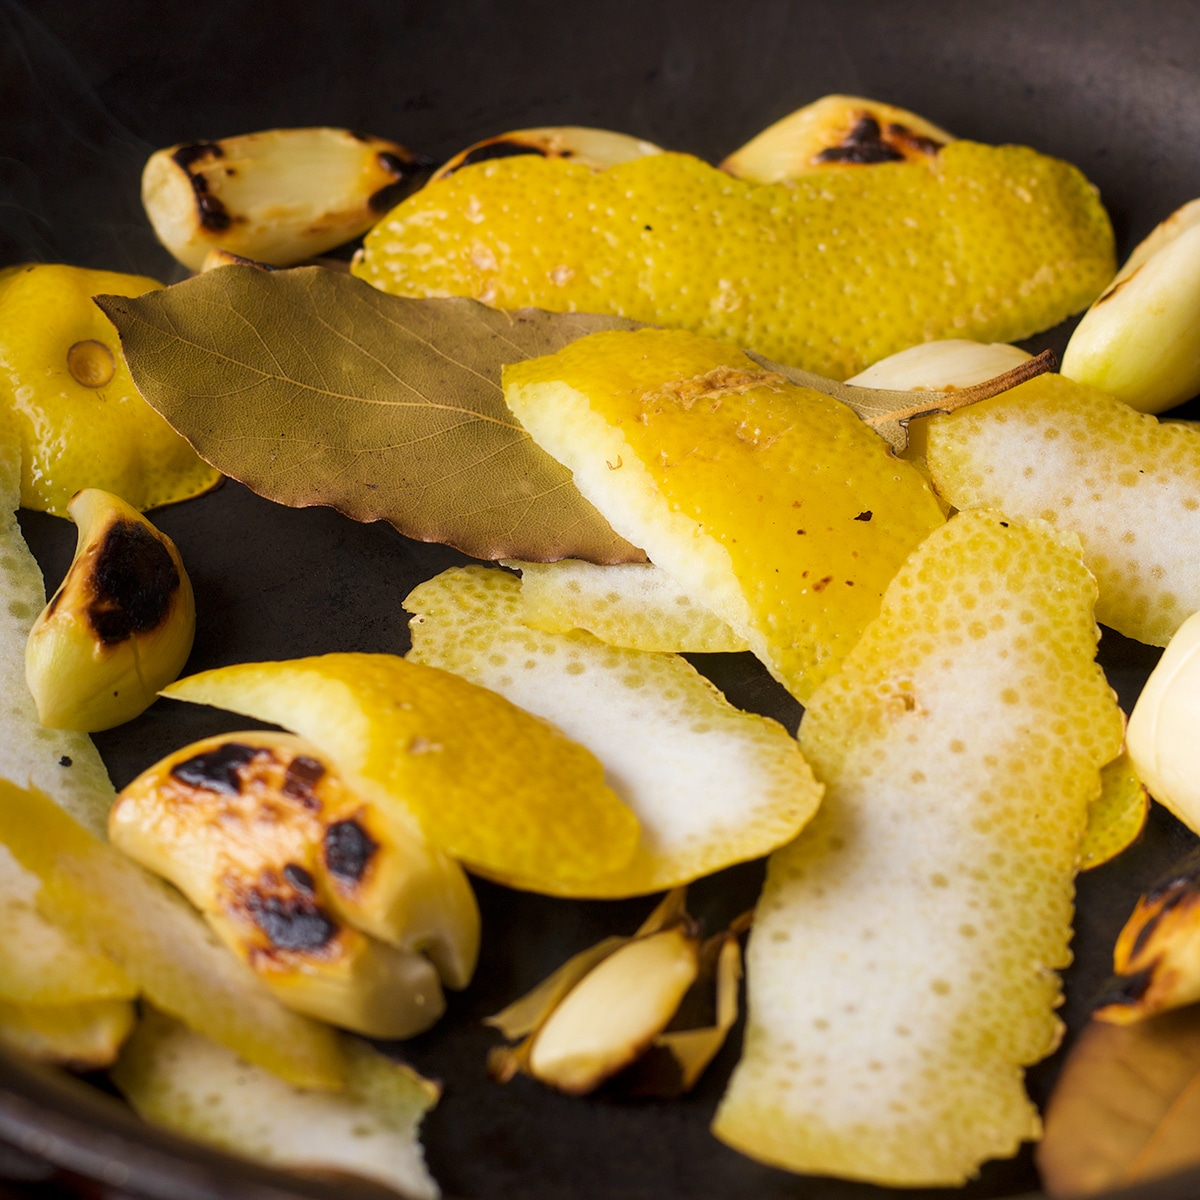 Charred garlic, lemon peel, and bay leaves cooking in a skillet.